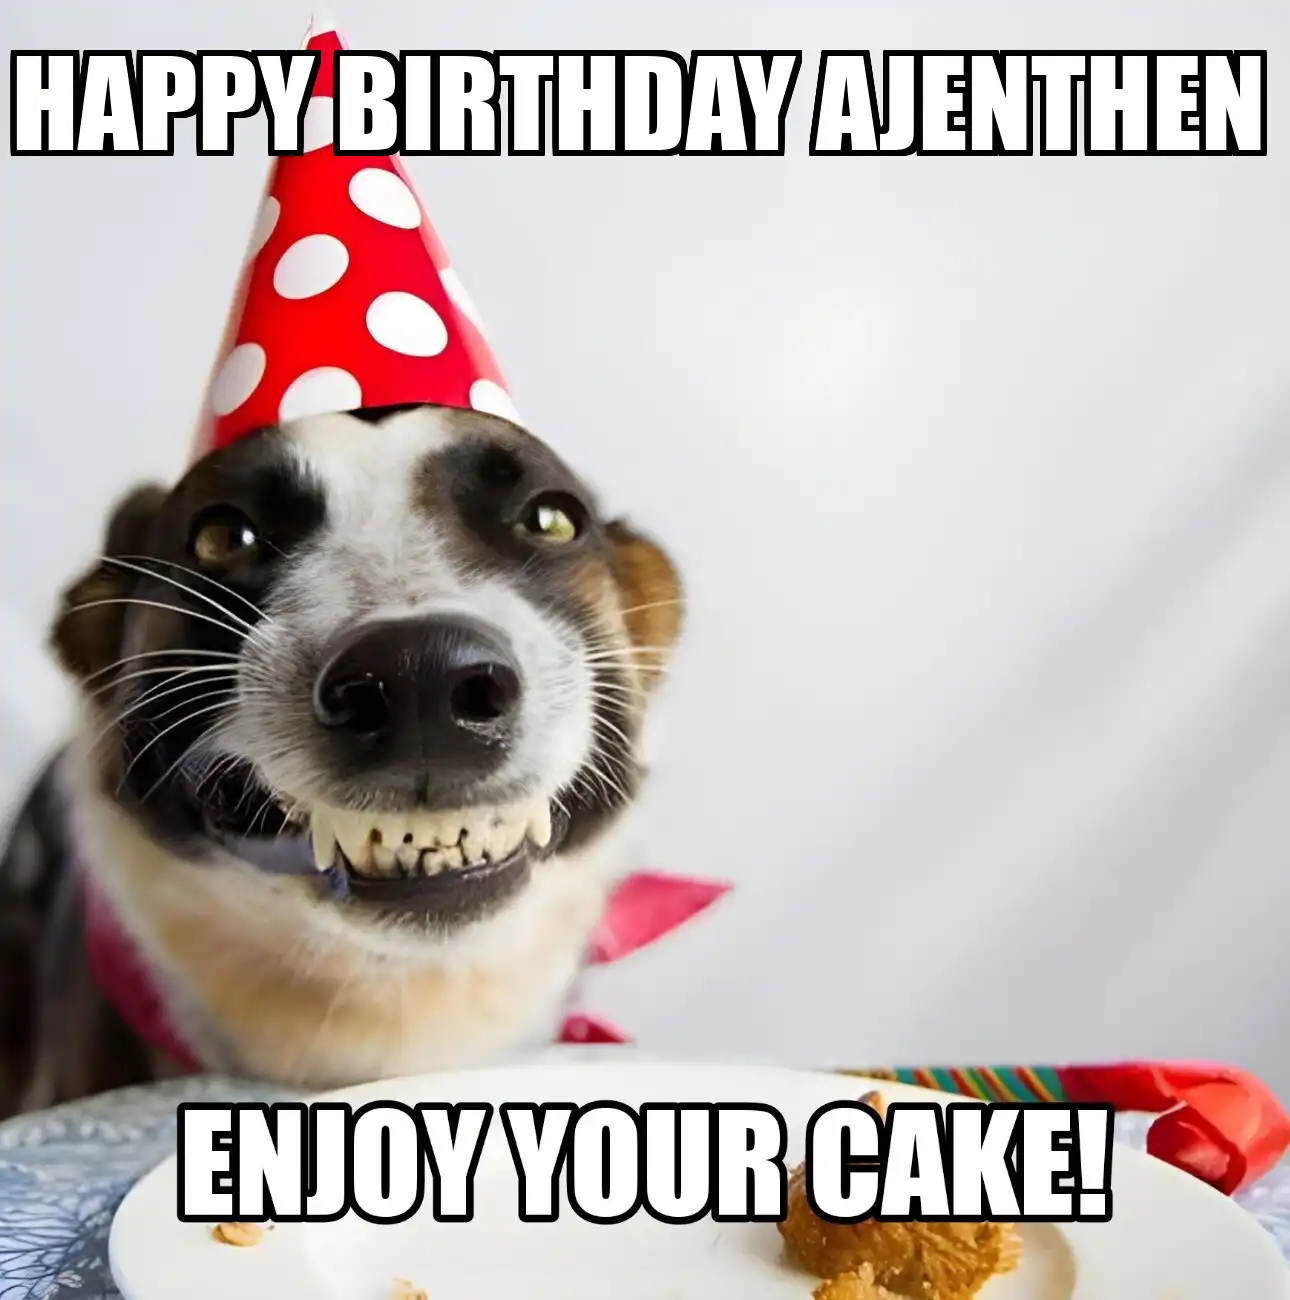 Happy Birthday Ajenthen Enjoy Your Cake Dog Meme